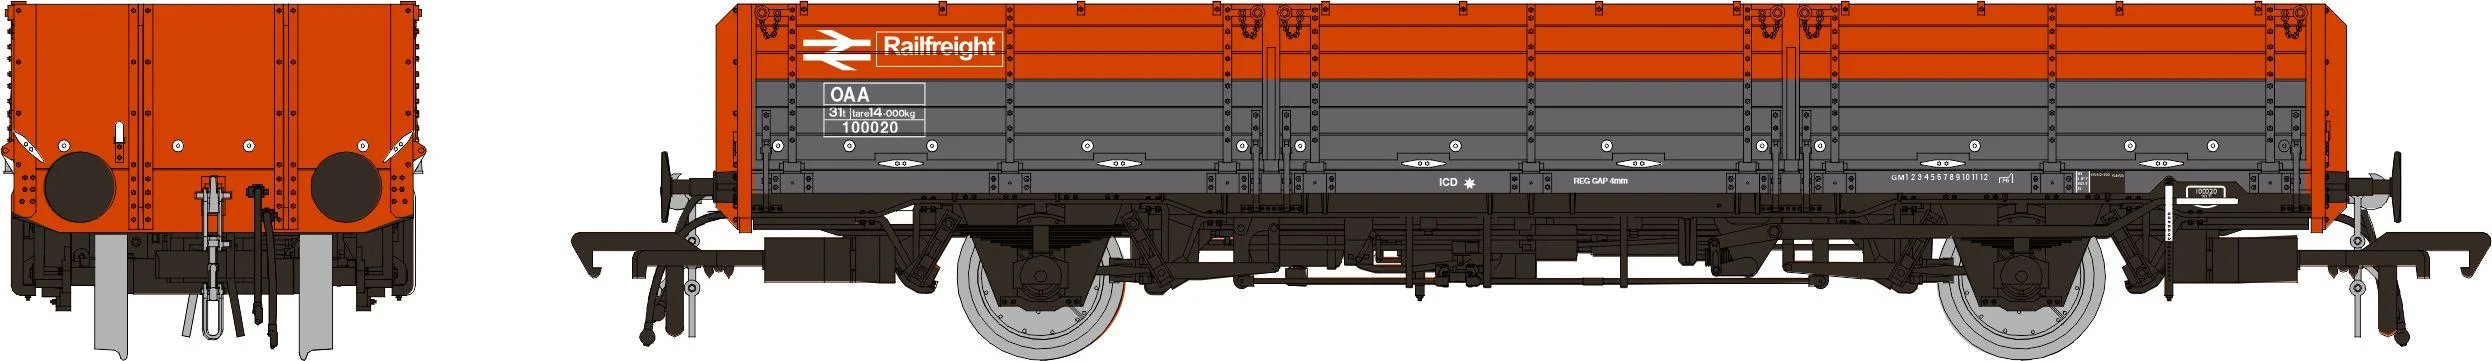 Rapido Trains 915009 OAA No. 100020, Railfreight red/grey